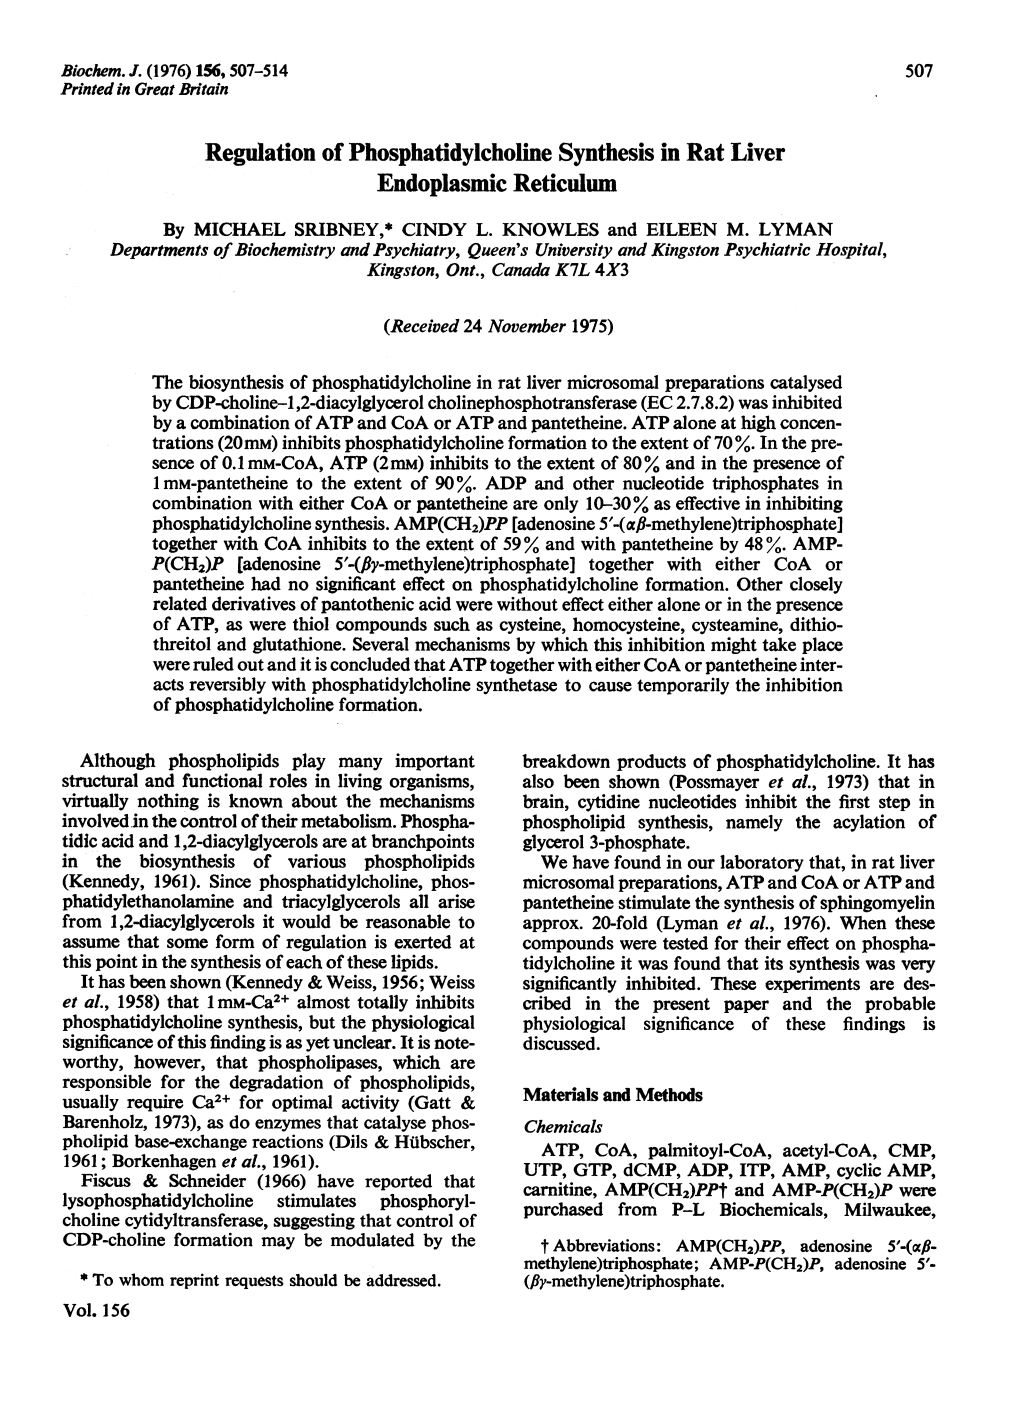 Regulation of Phosphatidylcholine Synthesis in Rat Liver Endoplasmic Reticulum by MICHAEL SRIBNEY,* CINDY L